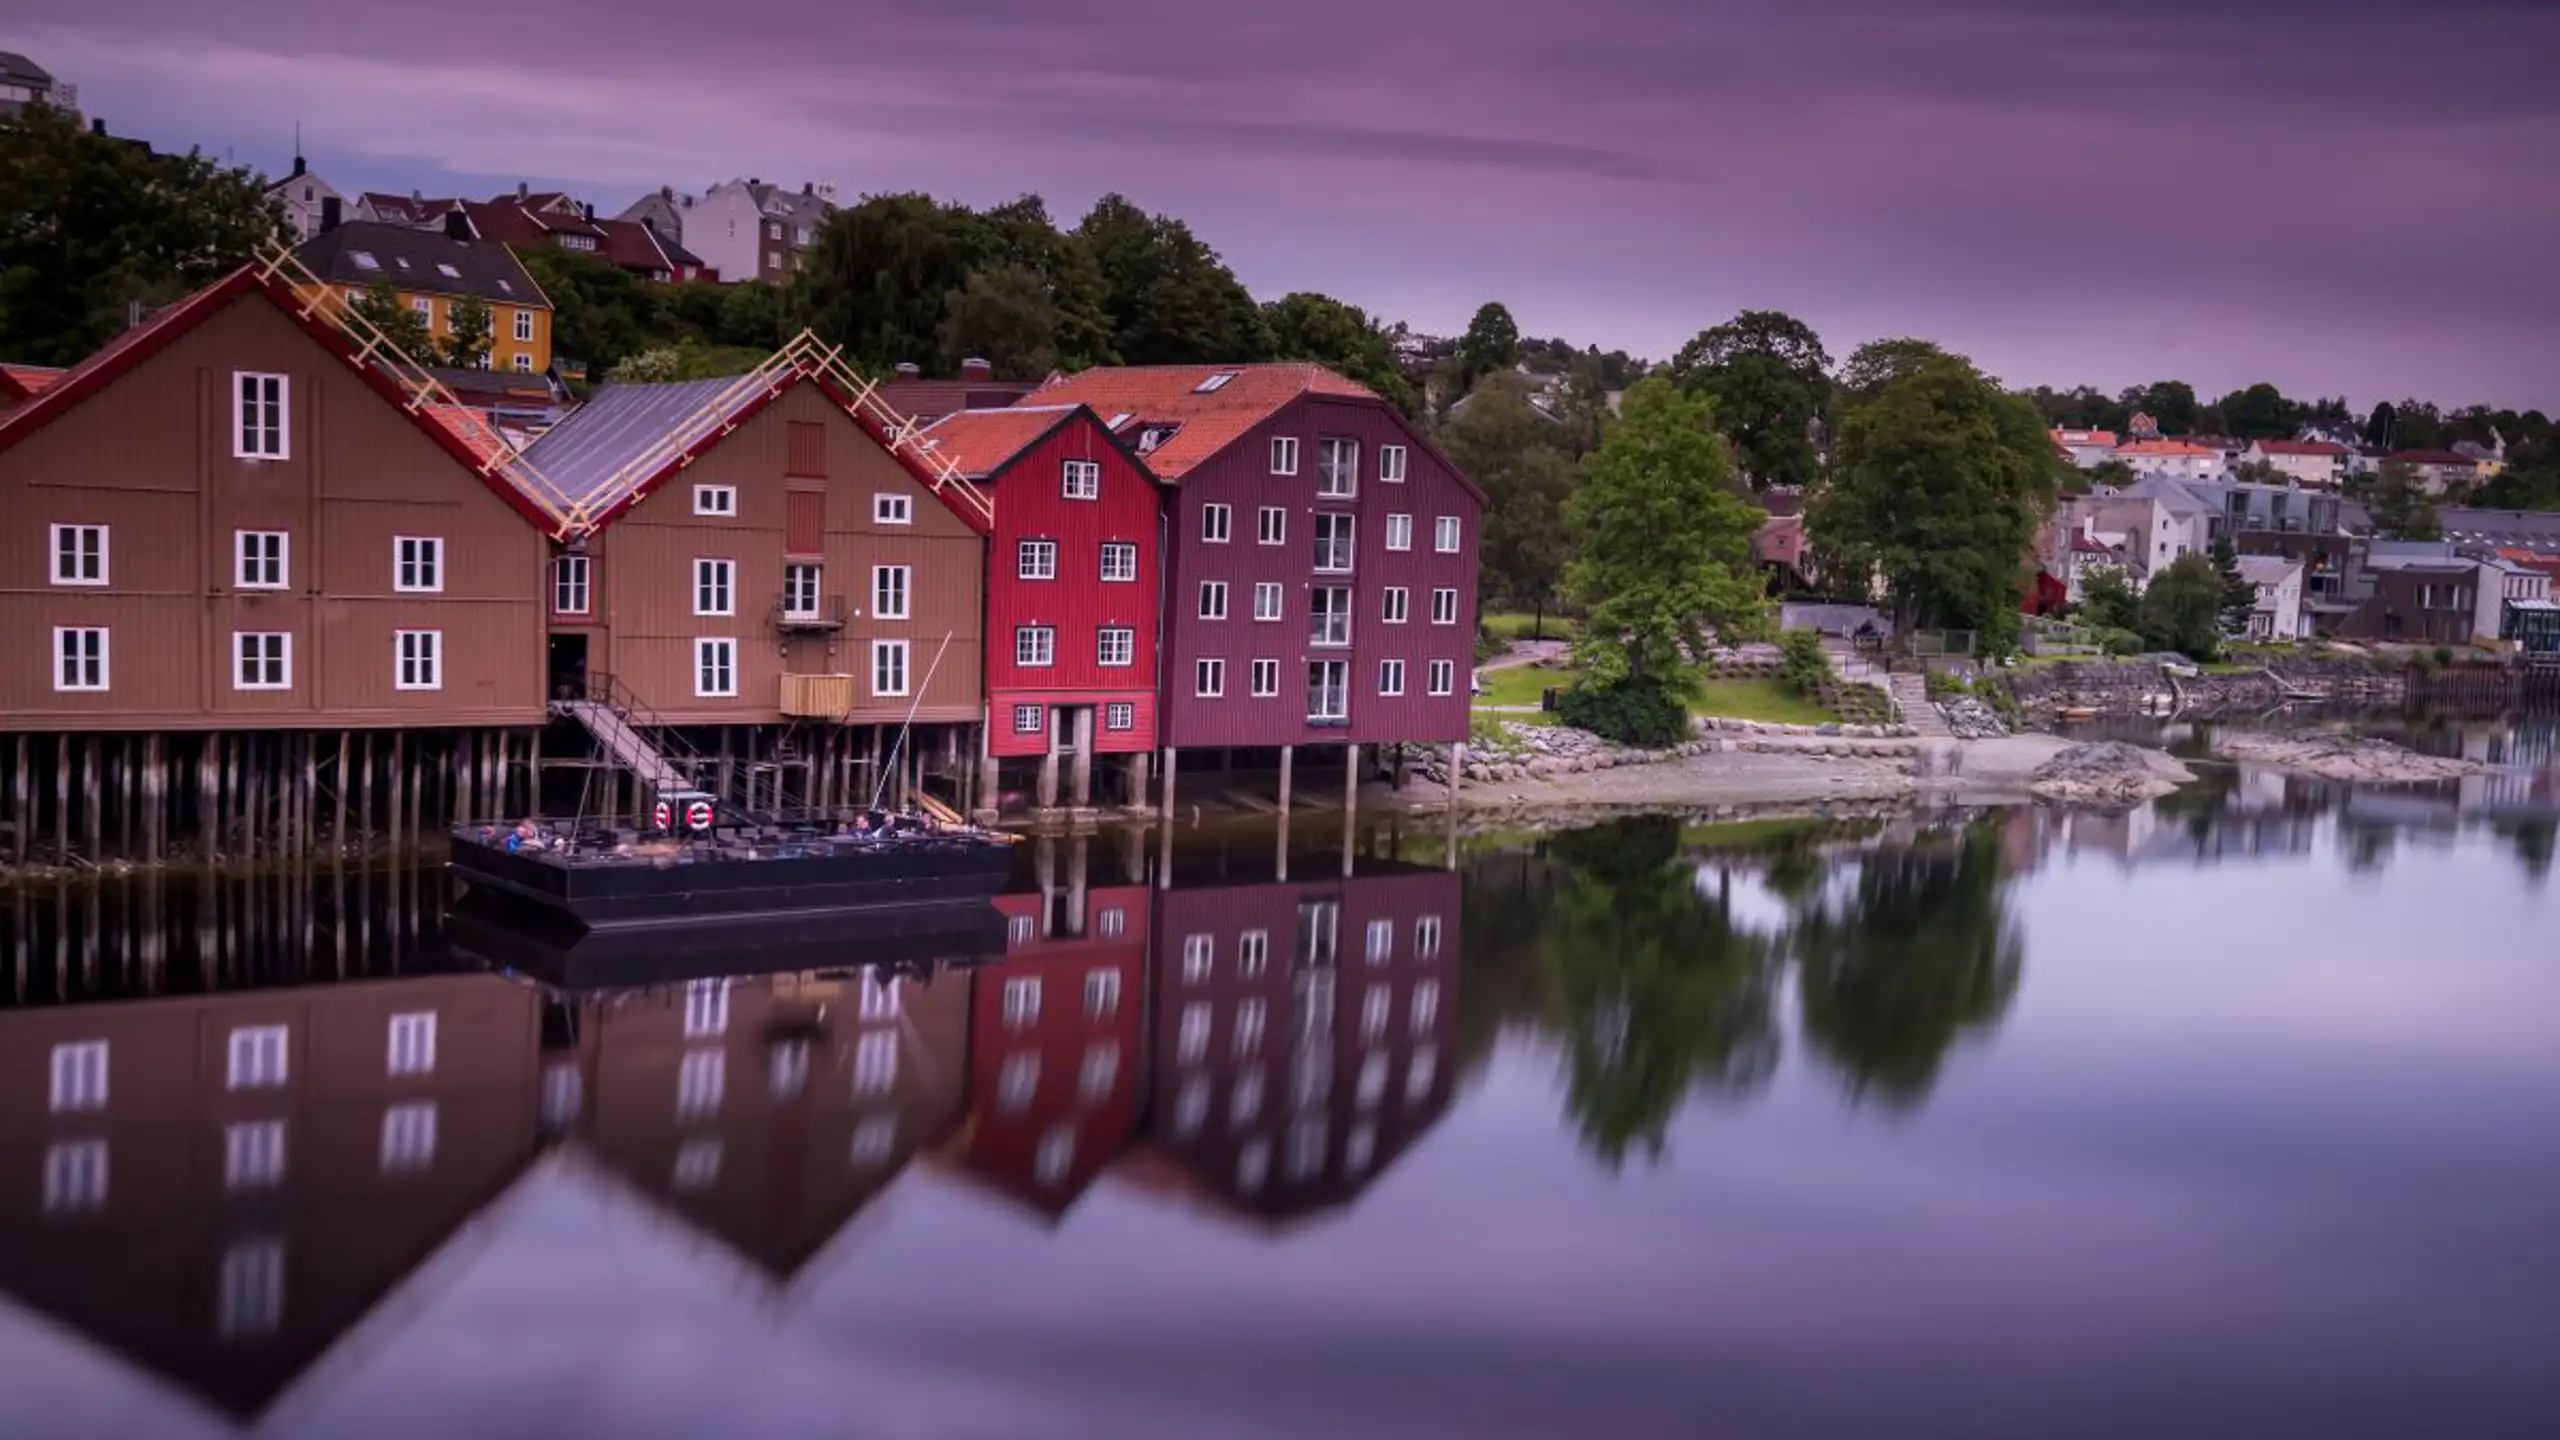 Trondheim City In Norway 2023 11 27 05 08 50 Utc (2)